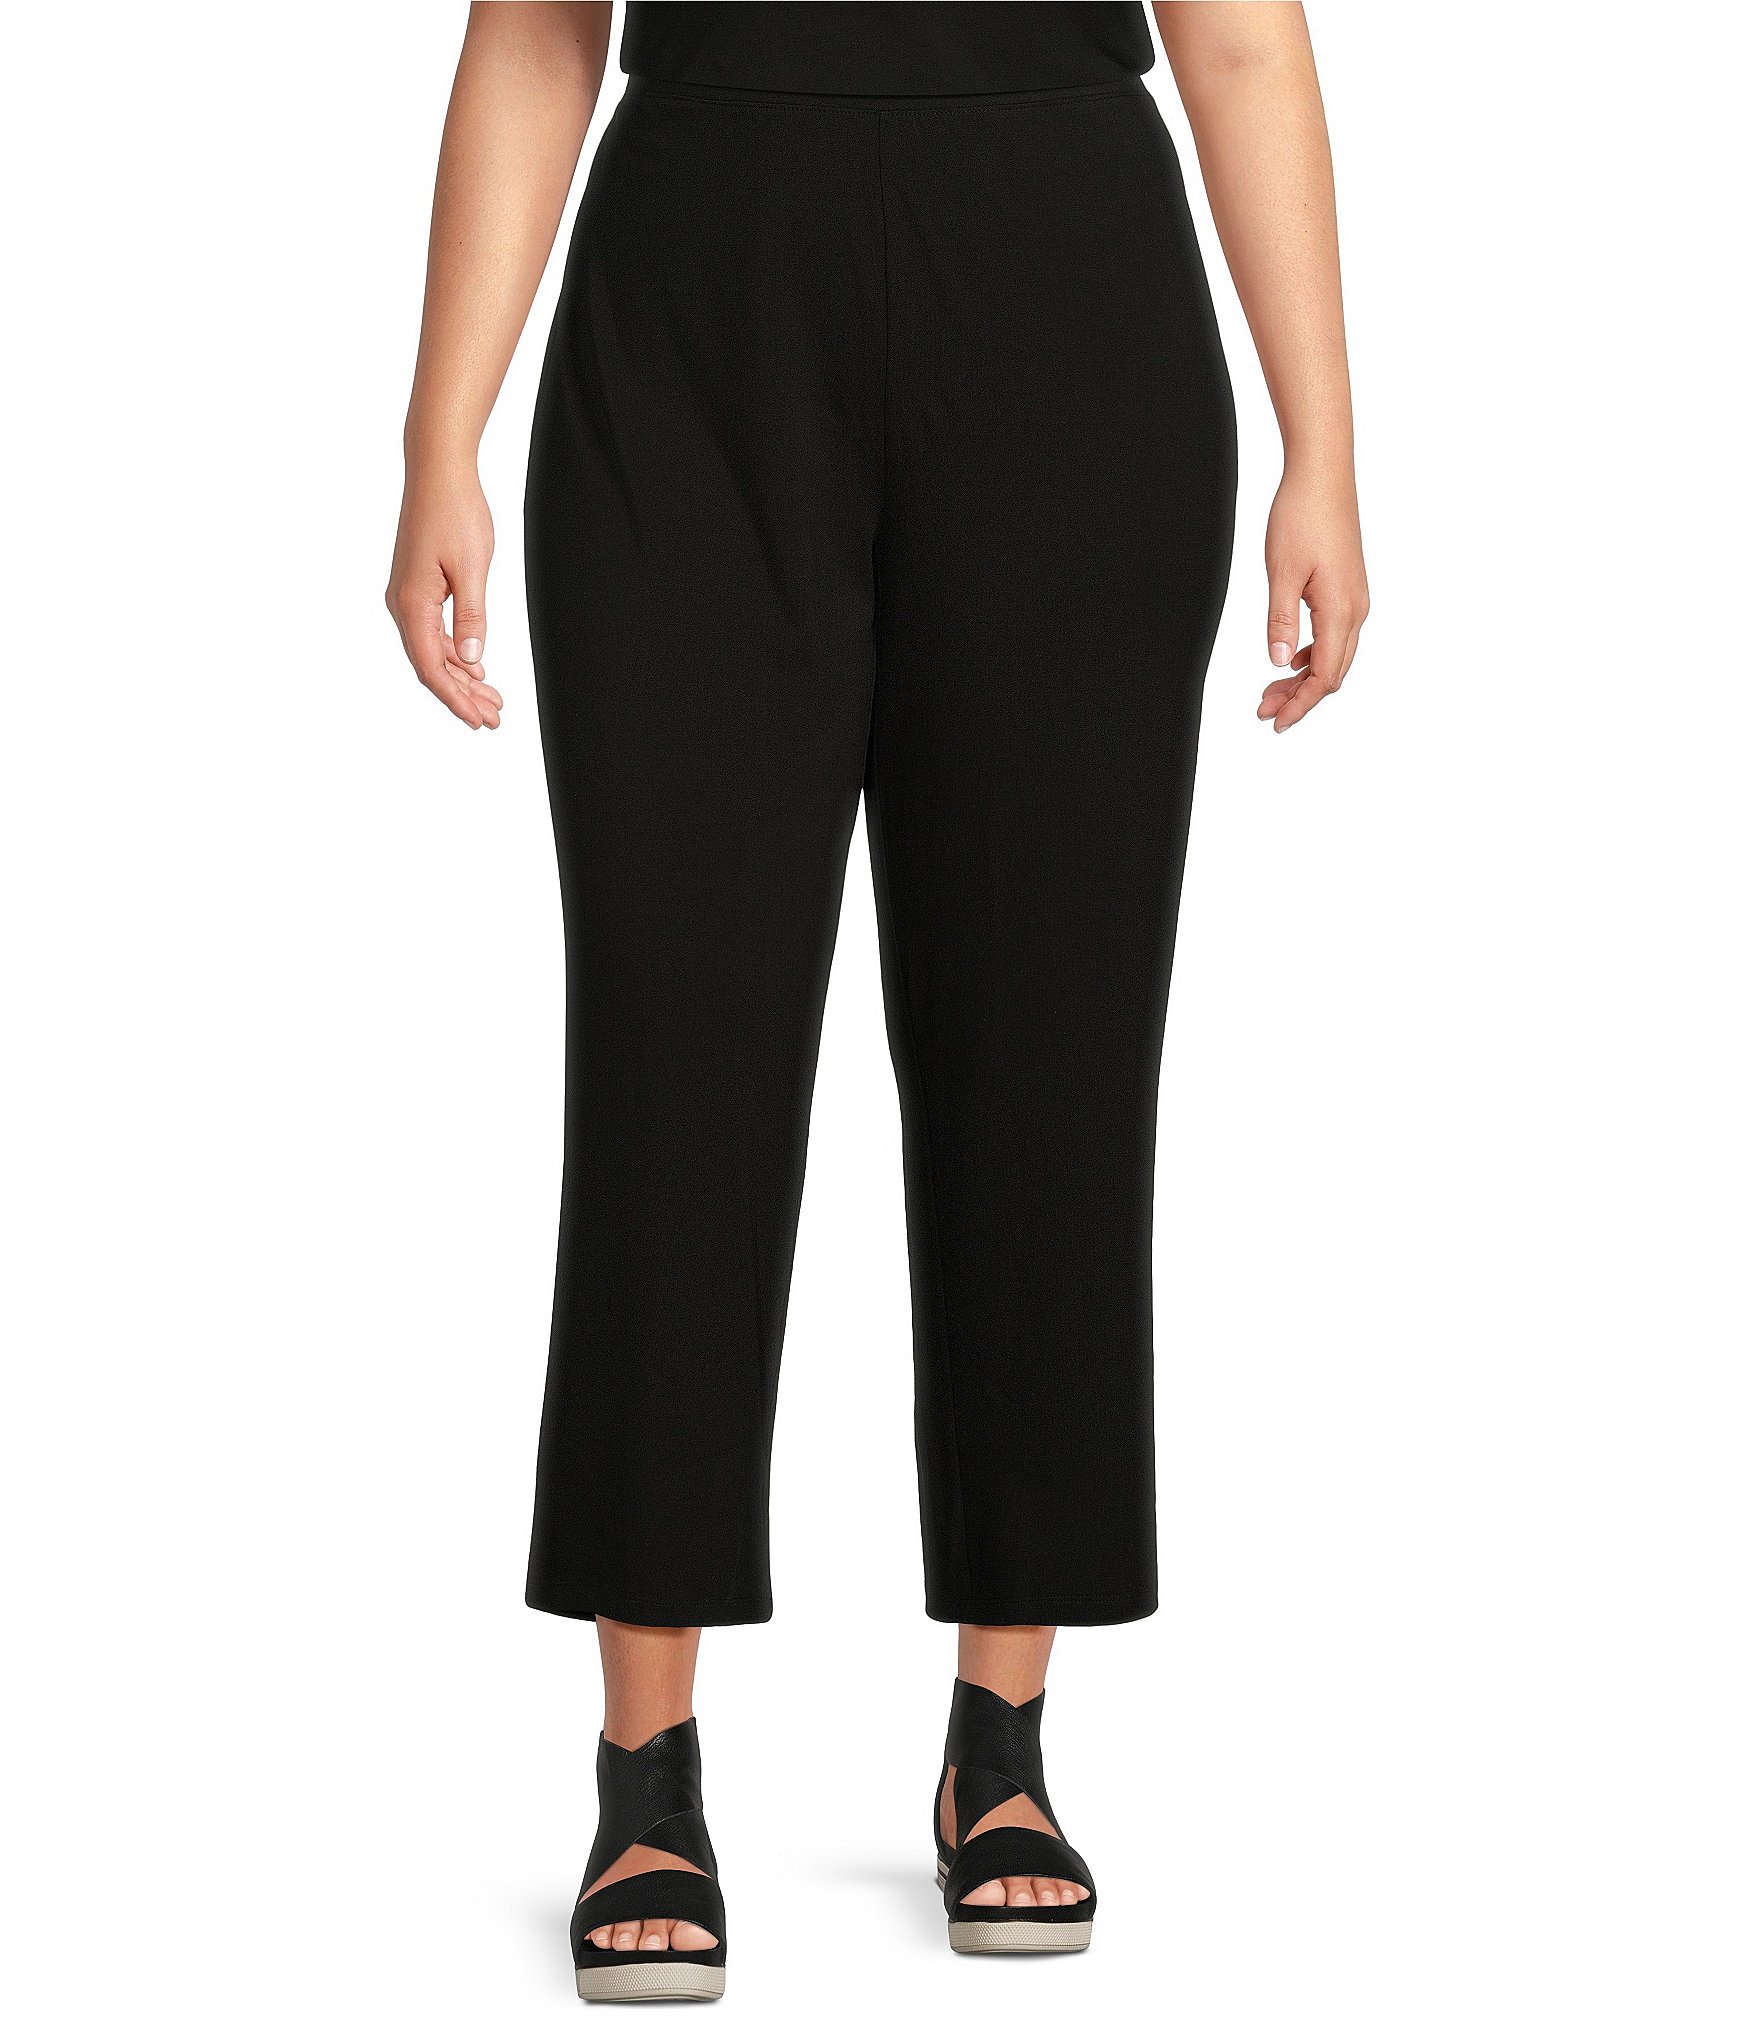 Jersey Crop Pants - Black - Ladies